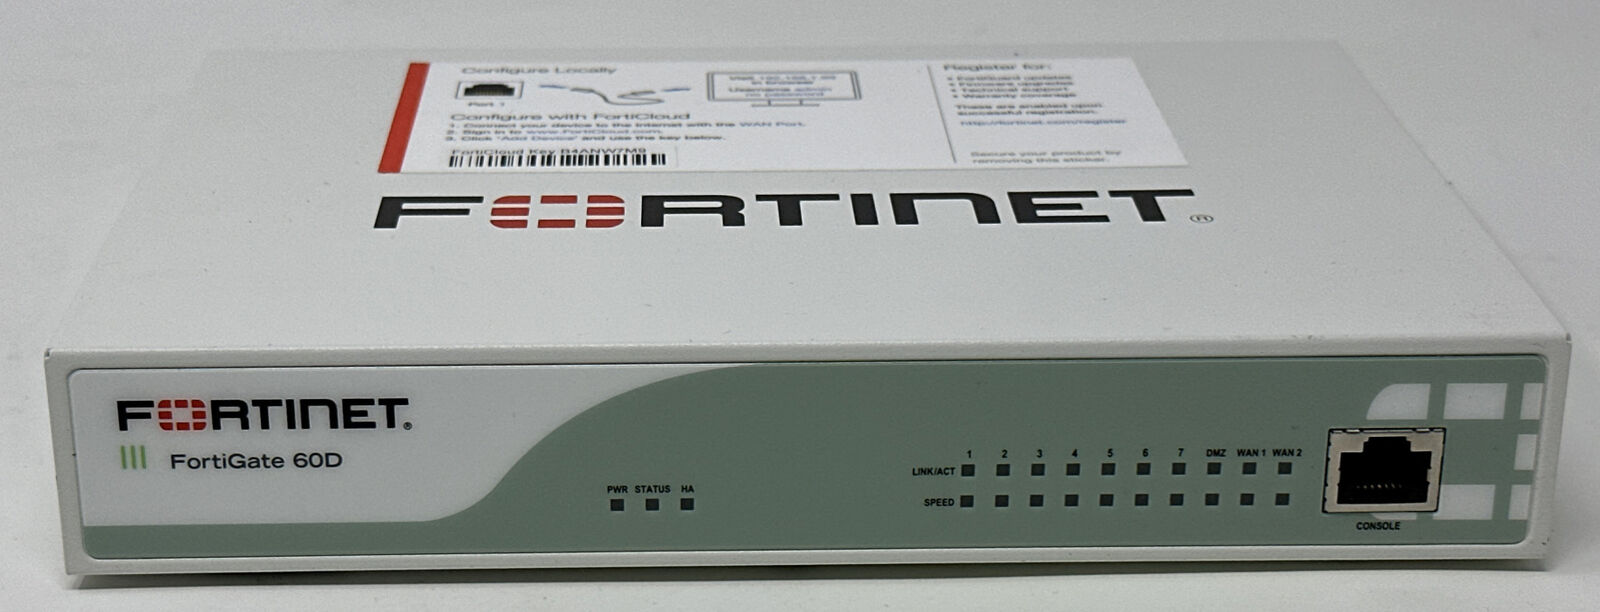 Fortinet Fortigate FG-60D Firewall Network Security Appliance v5.4.7